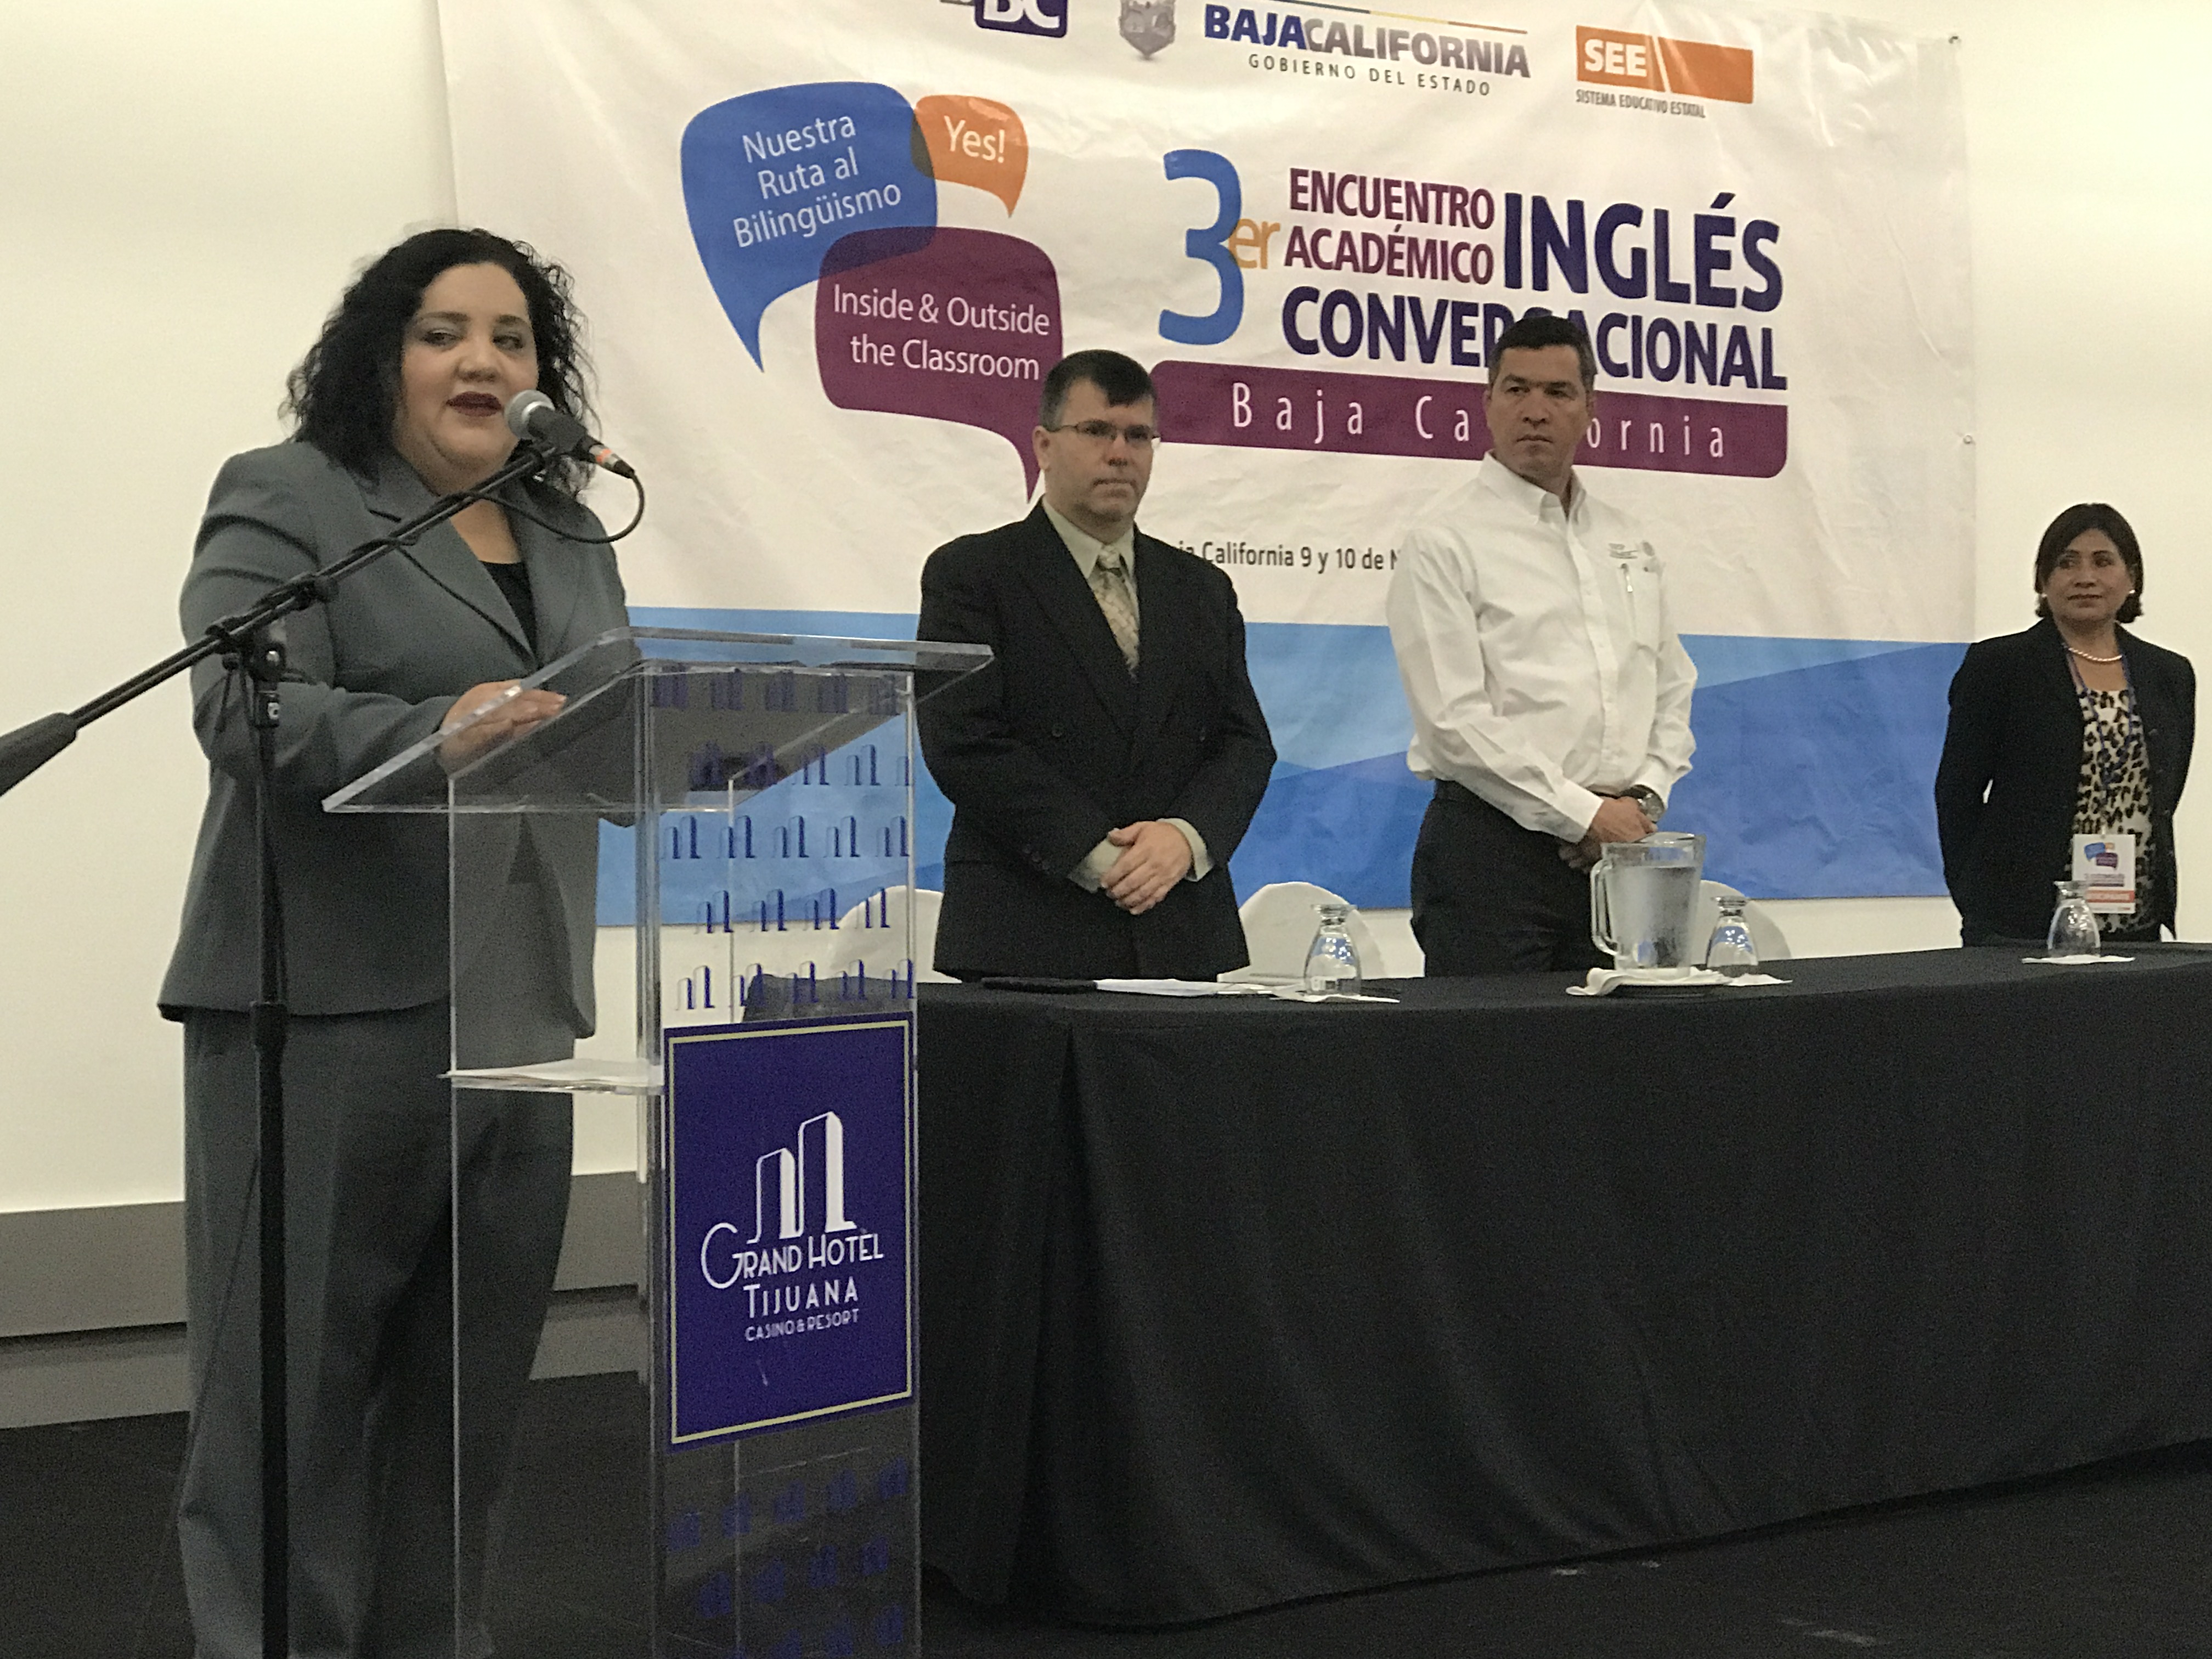 Arranca tercer encuentro académico de ingles conversacional en Baja California